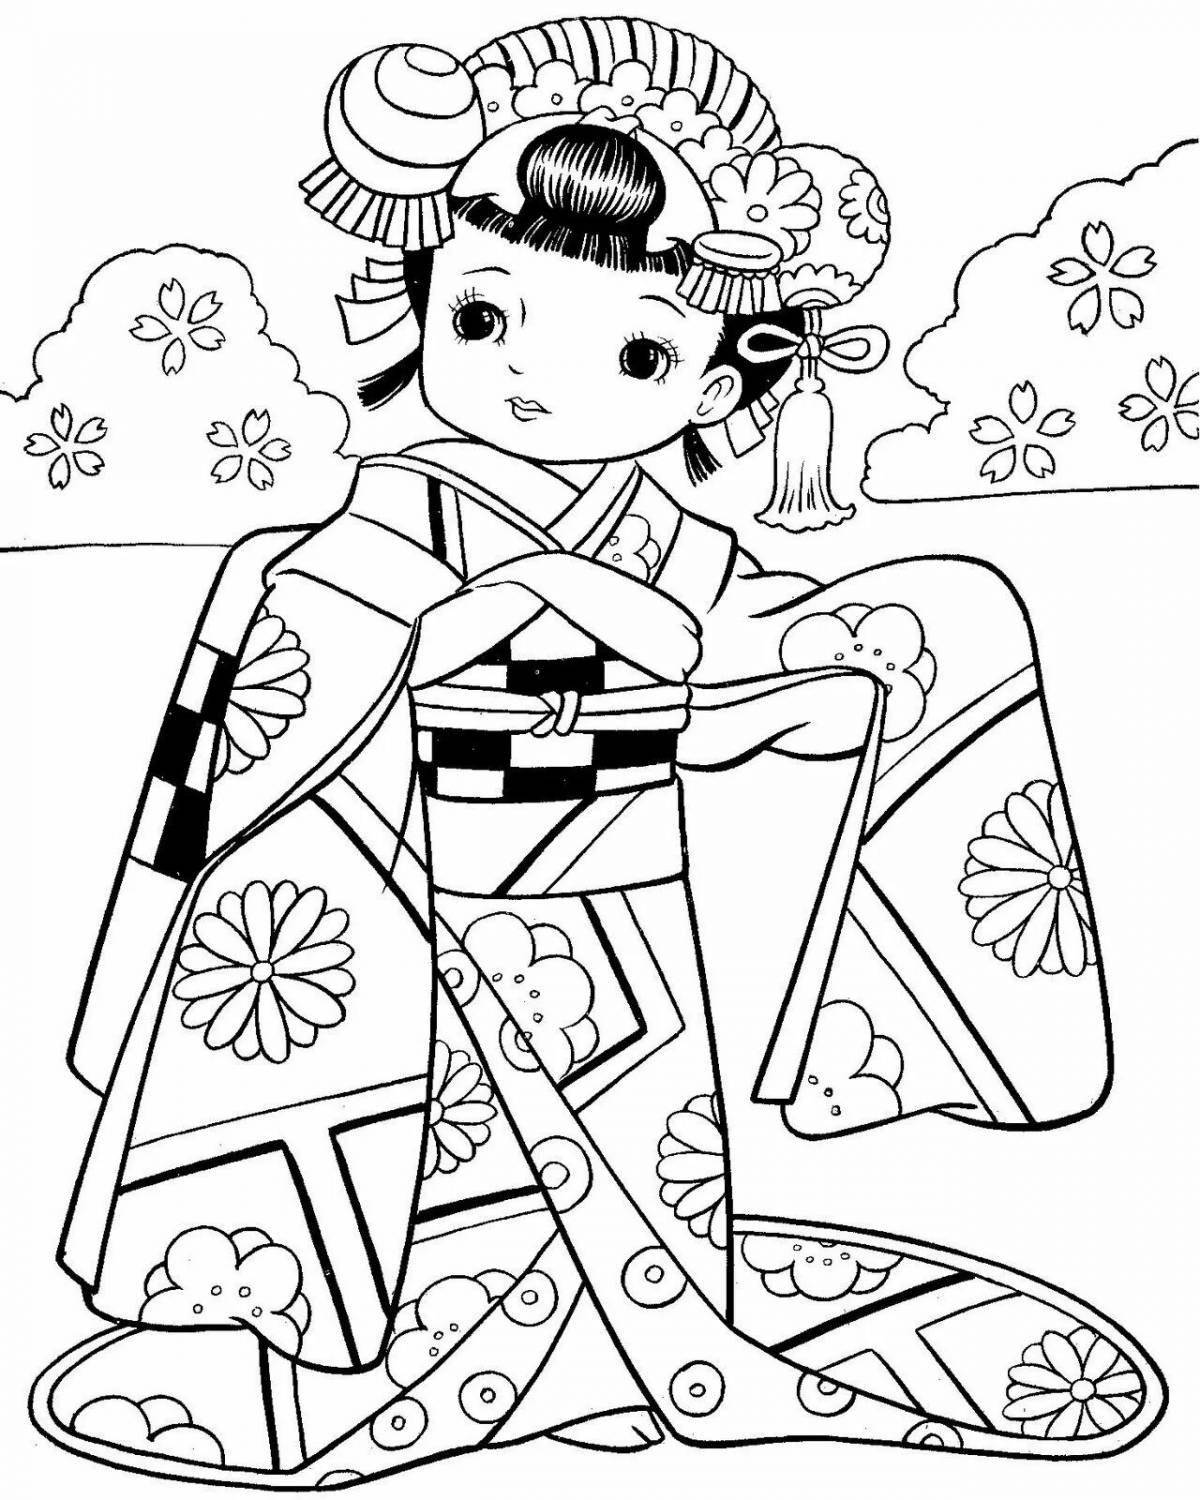 Colorful kimono coloring page for kids